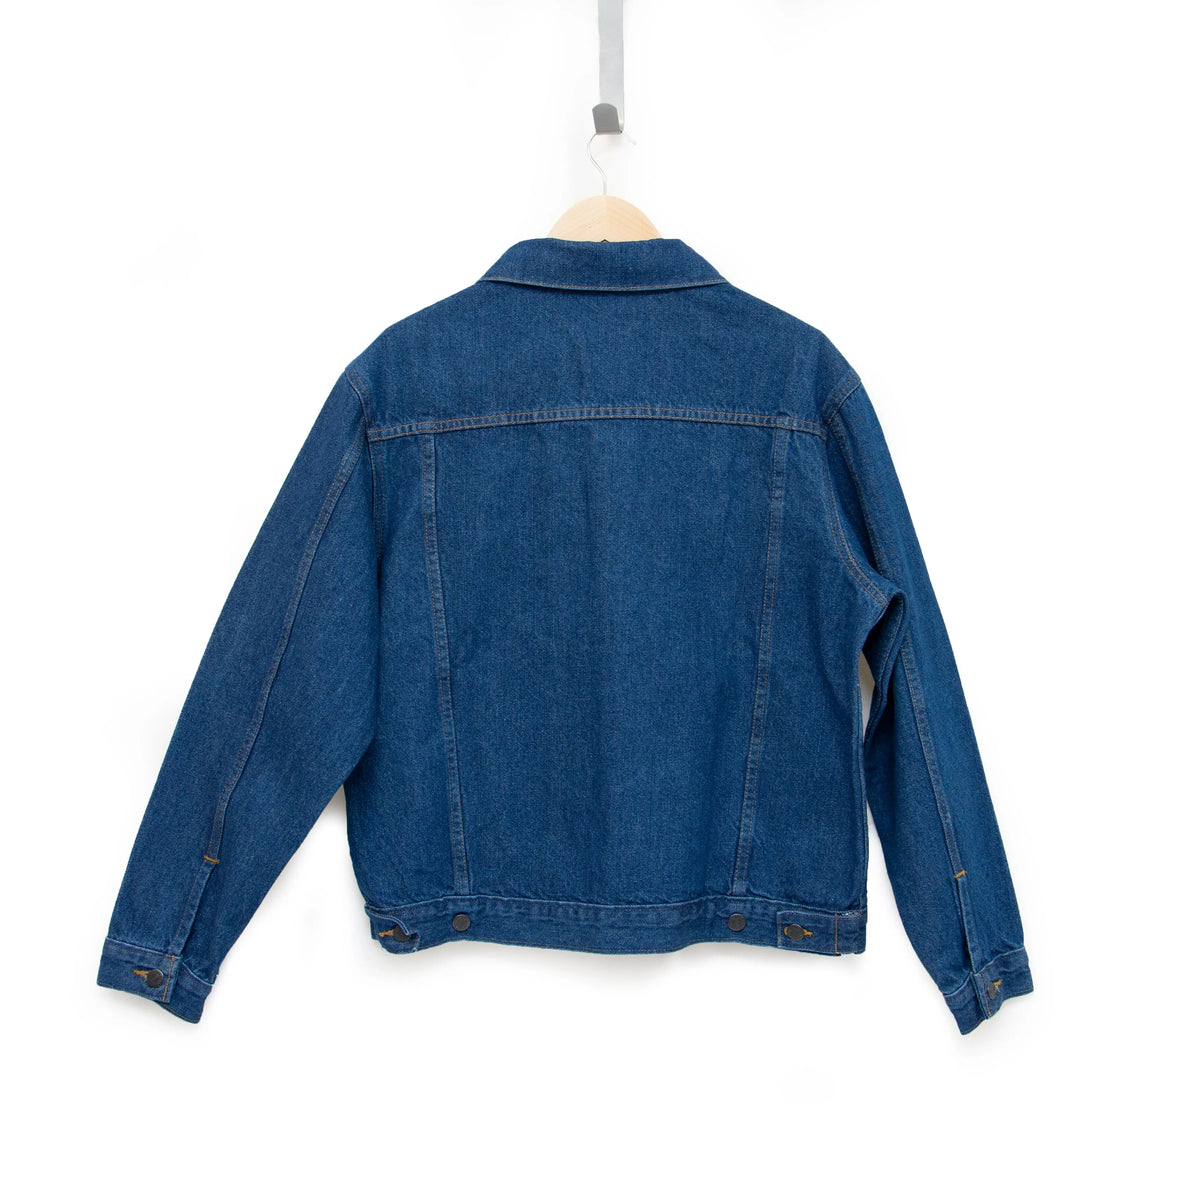 Vintage 70s Mens Coat Long Denim Jacket Blue Jean Jacket -  Hong Kong